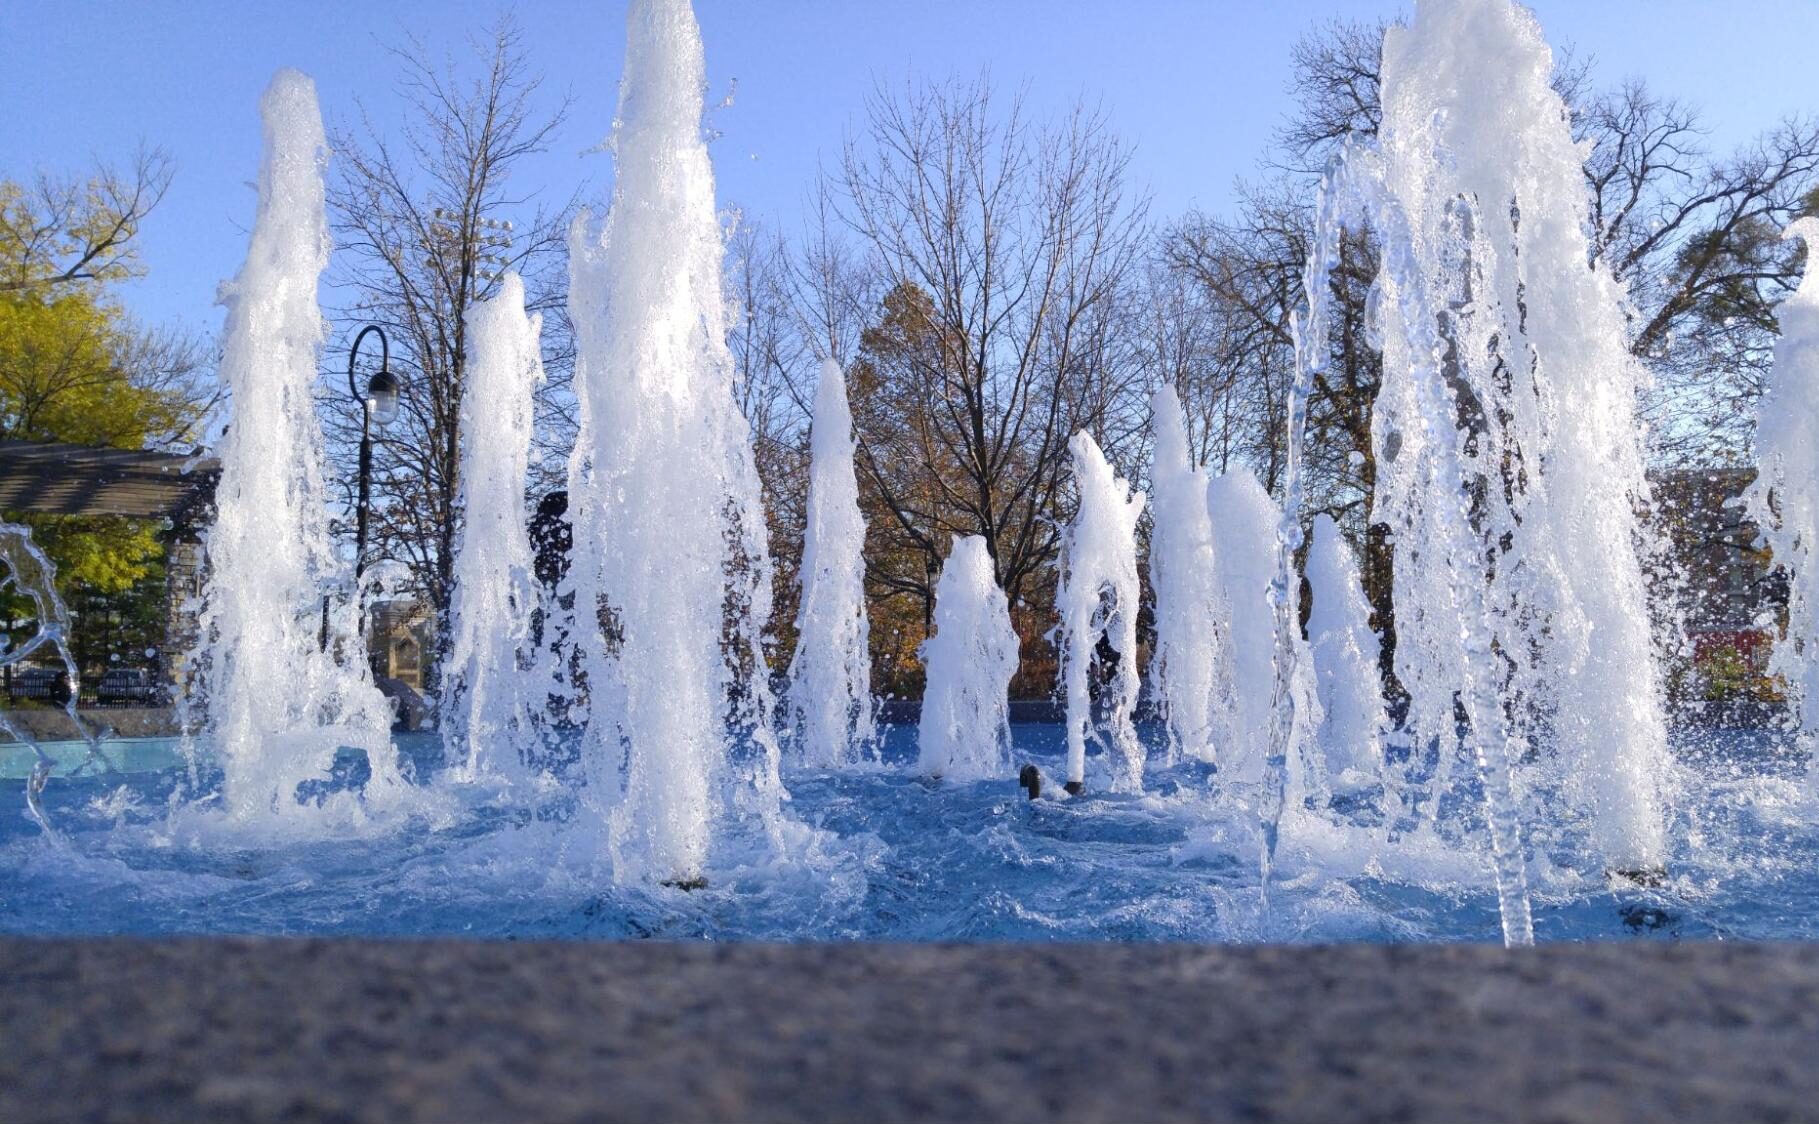 The fountain at the Naperville (Illinois) Riverwalk